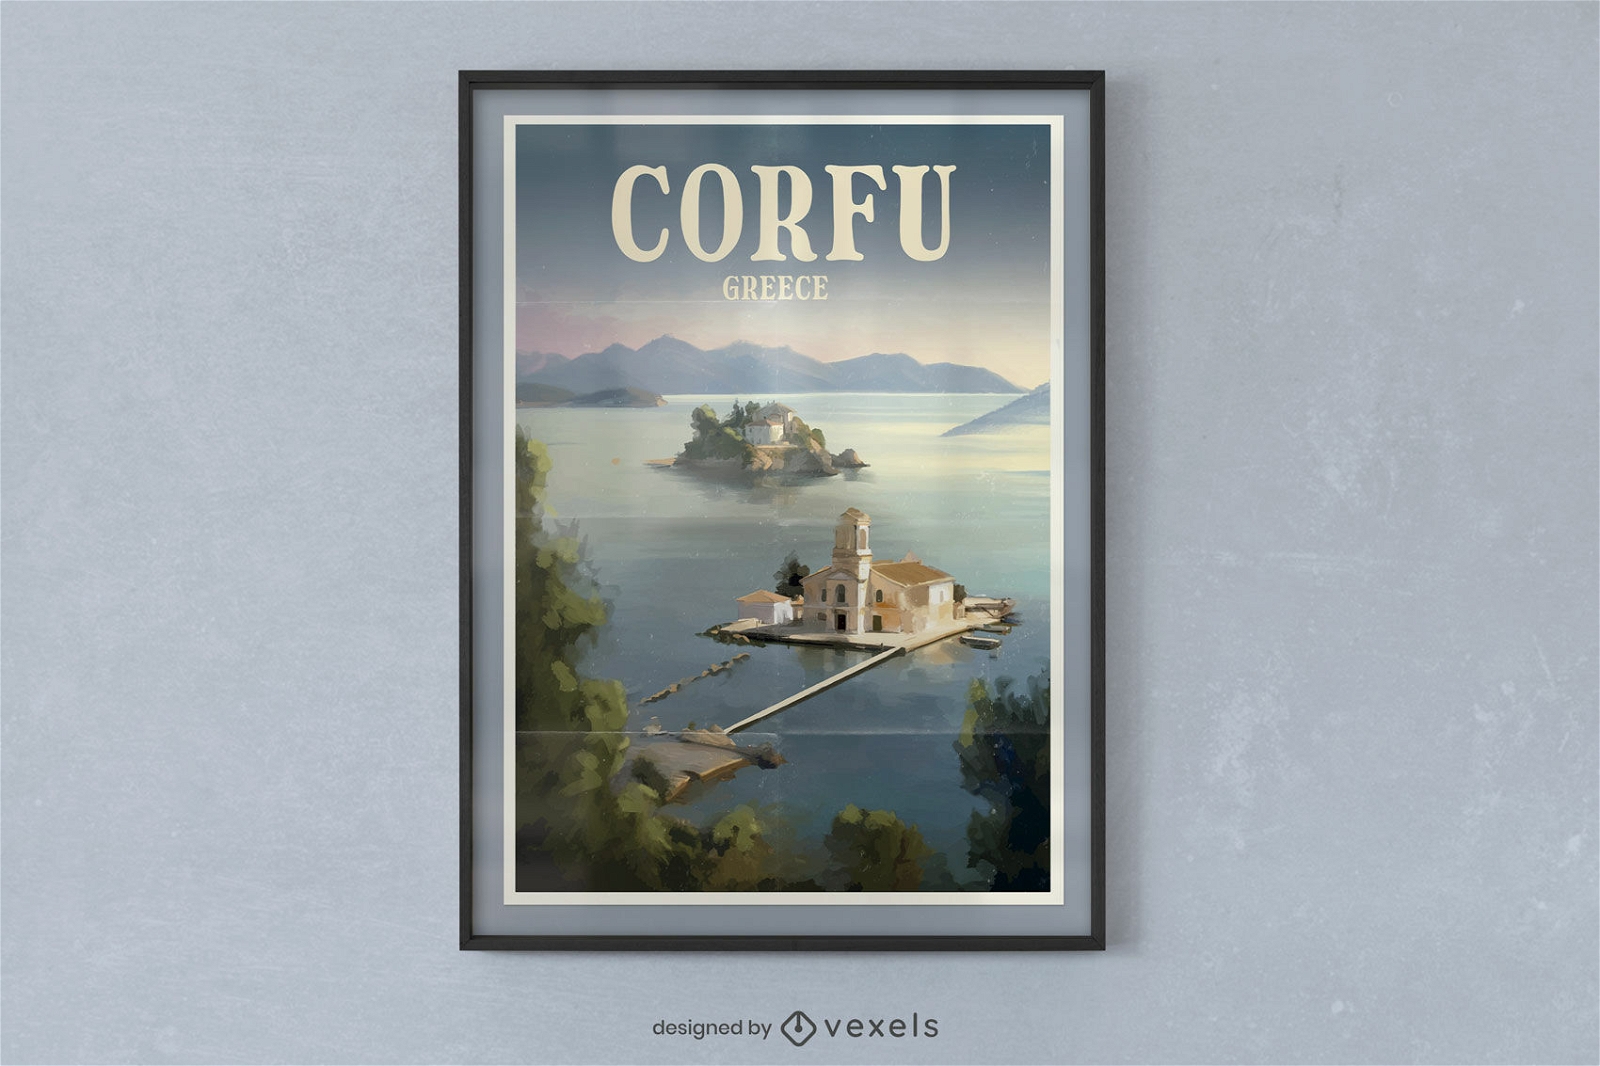 Corfu island church poster design